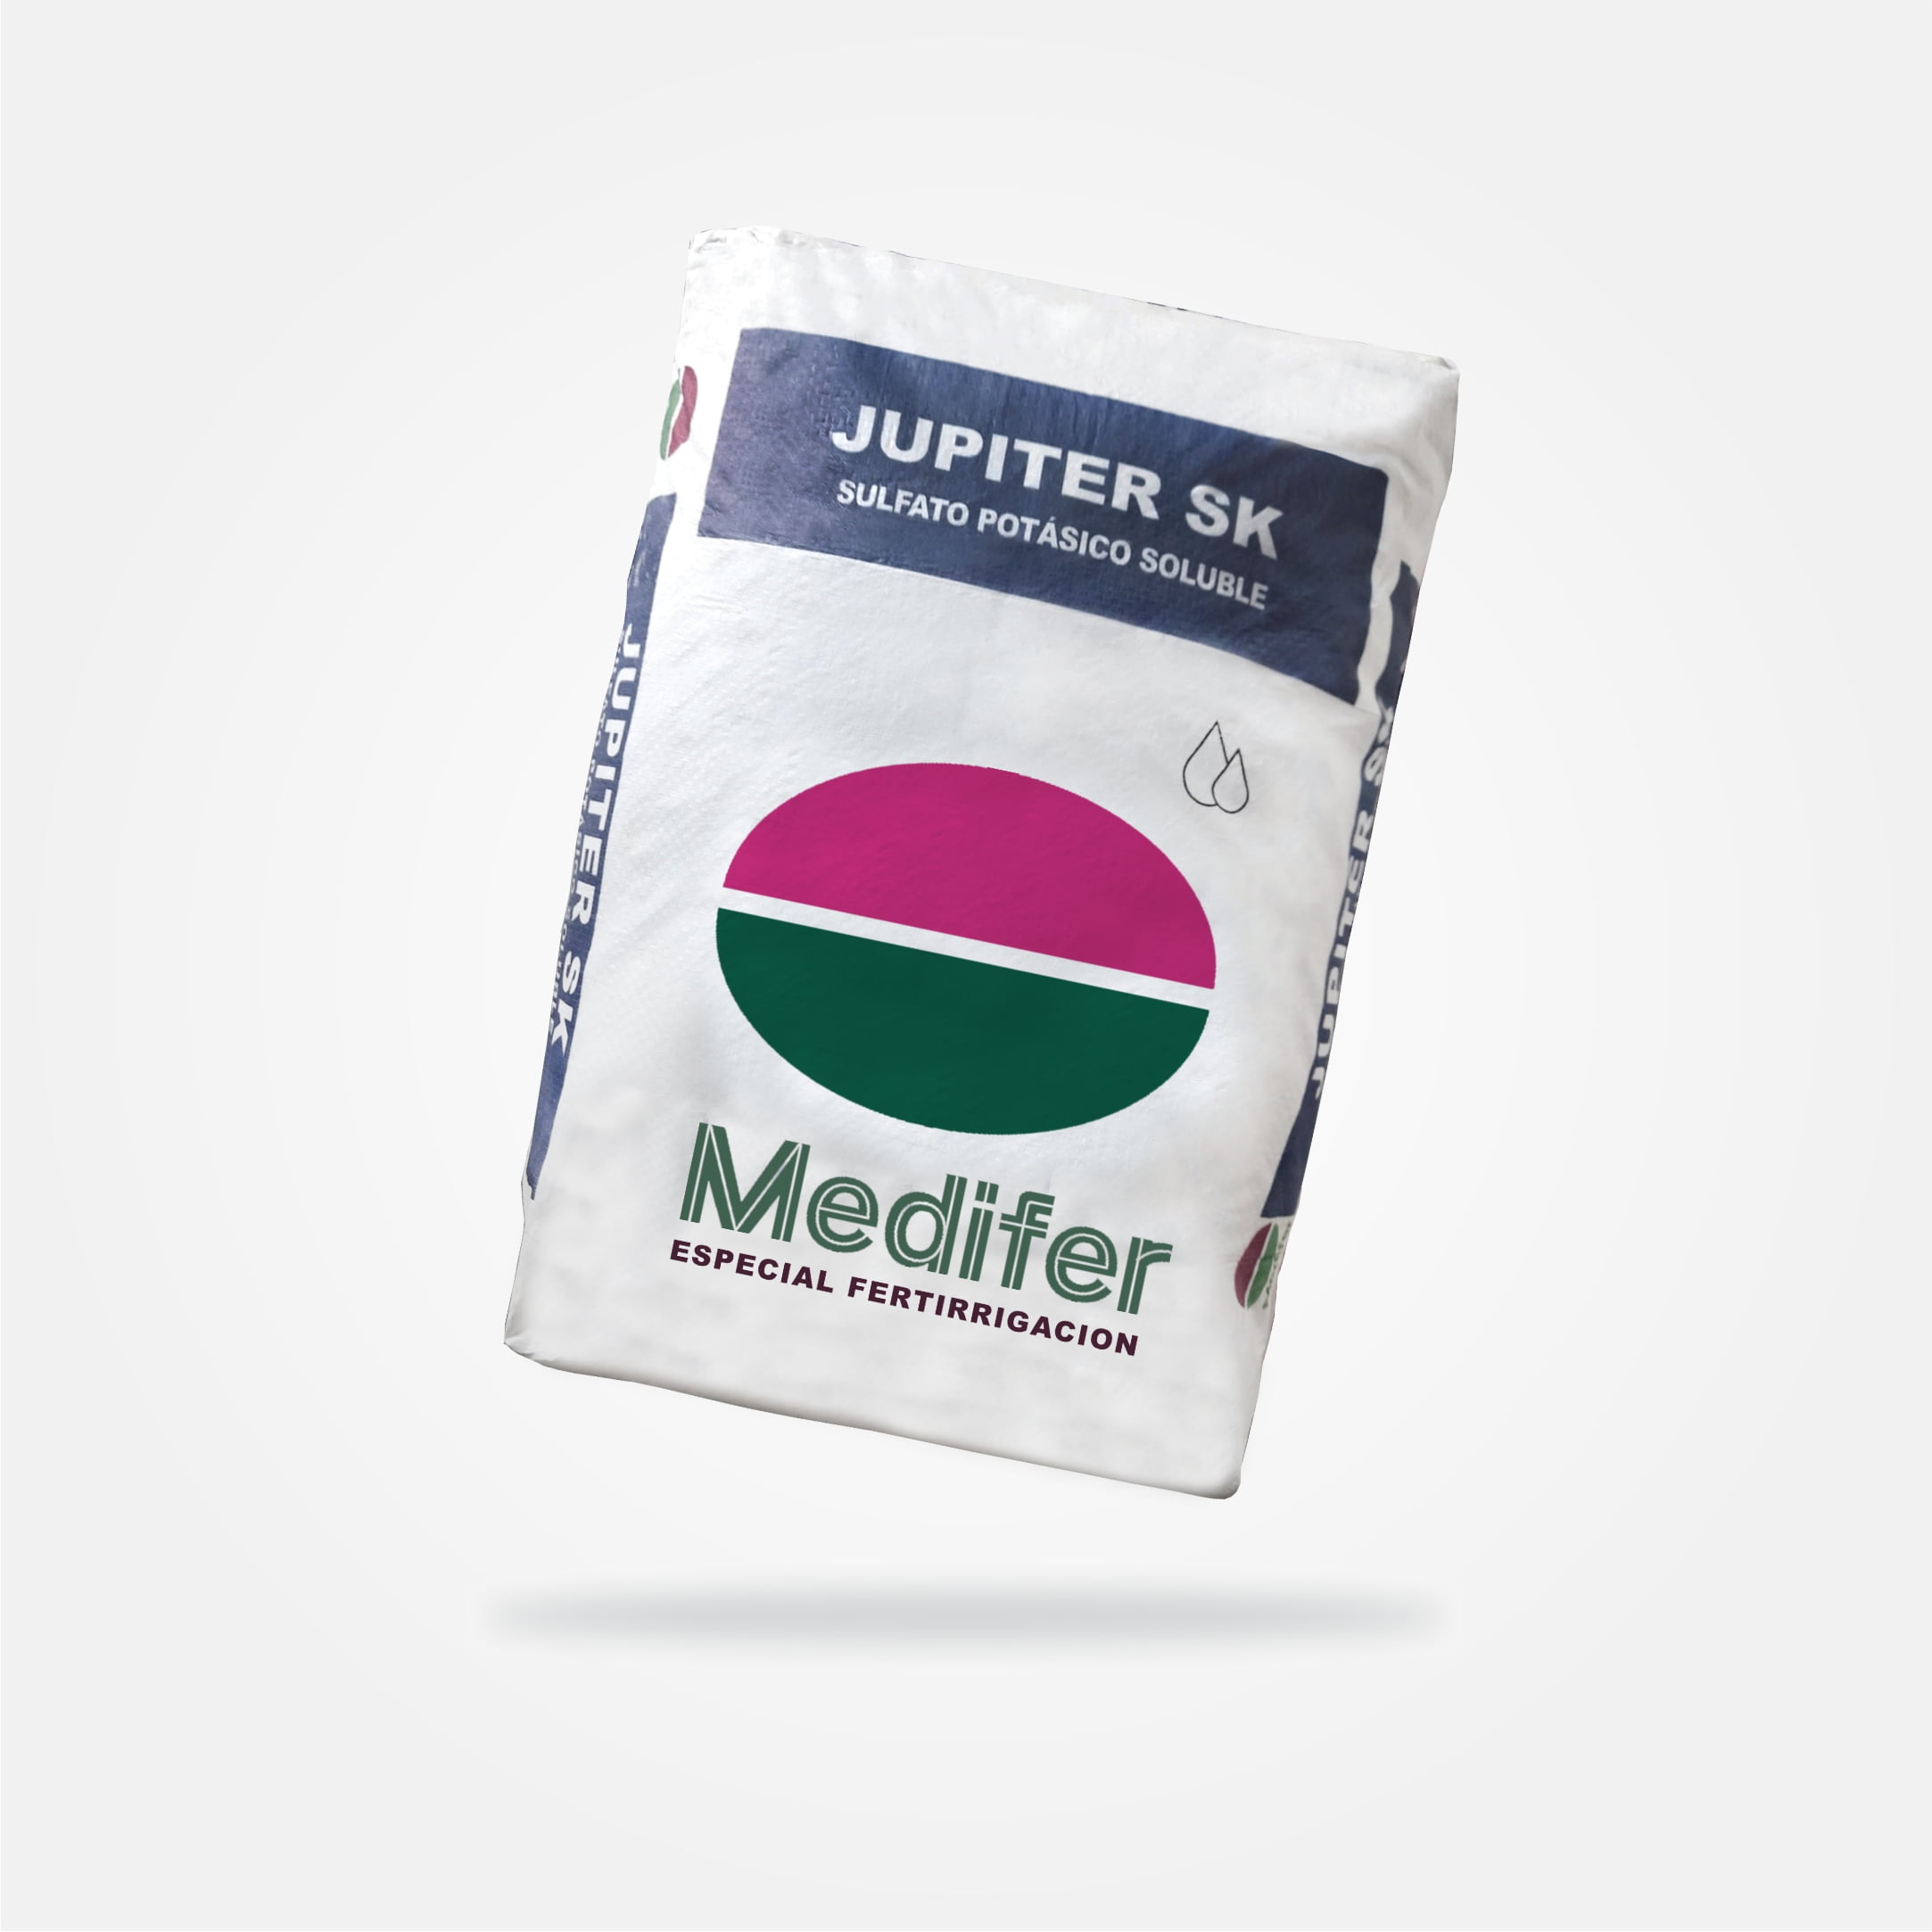 jupiter 1 - محصولات کمپانی مدیفر